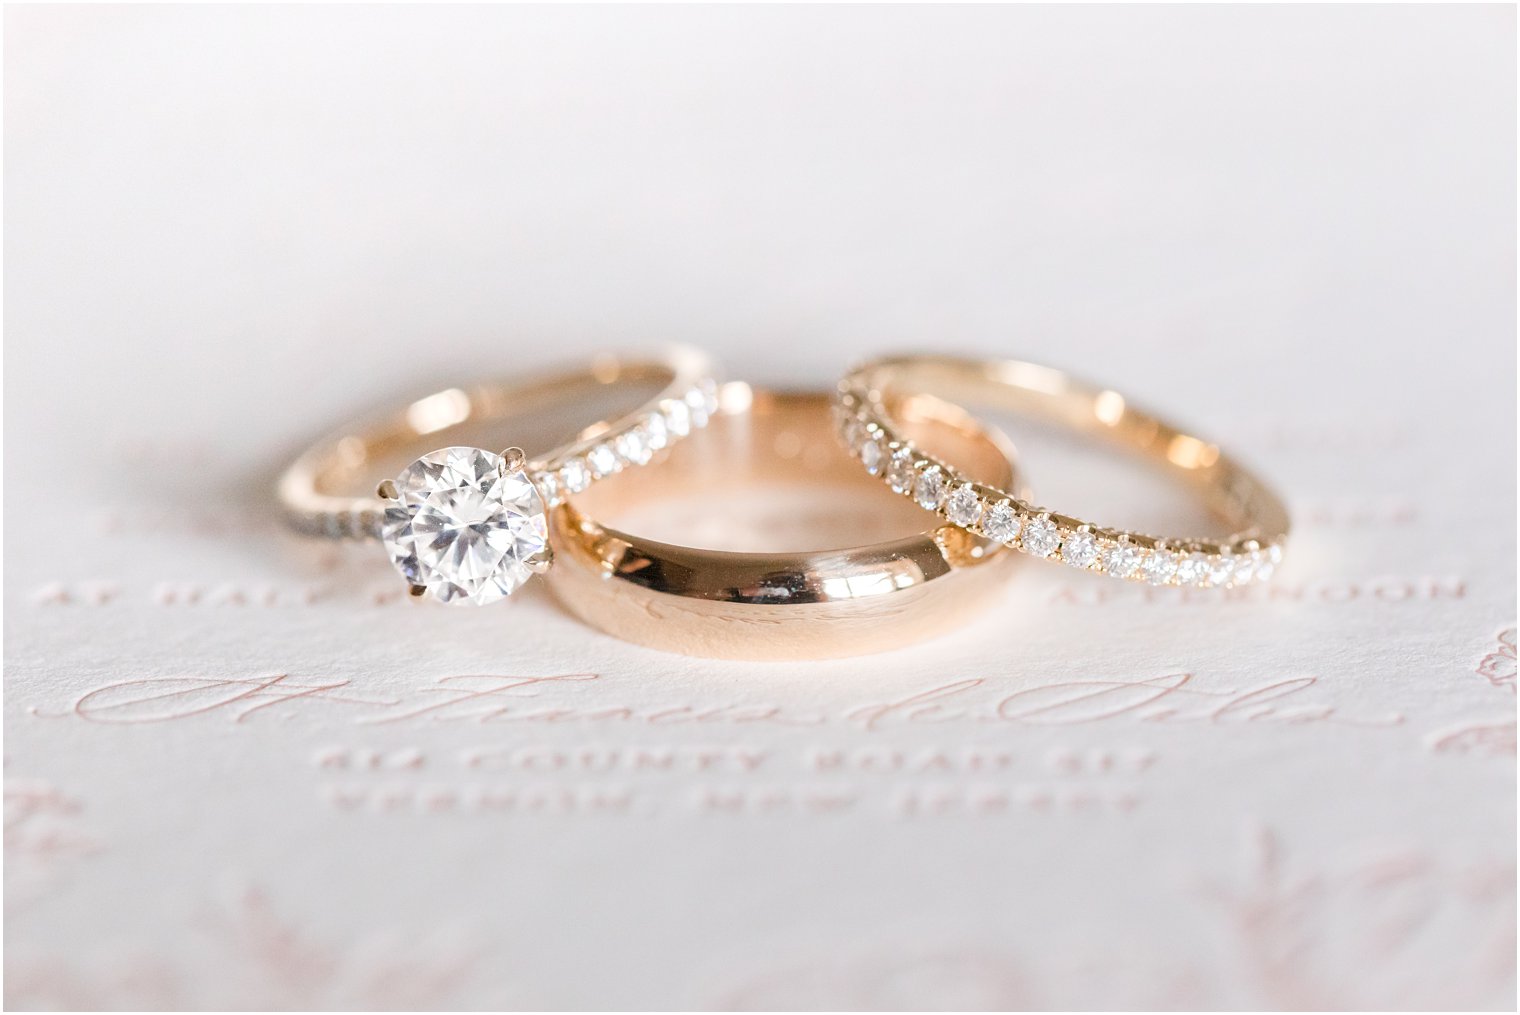 gold wedding rings rest on wedding invitation